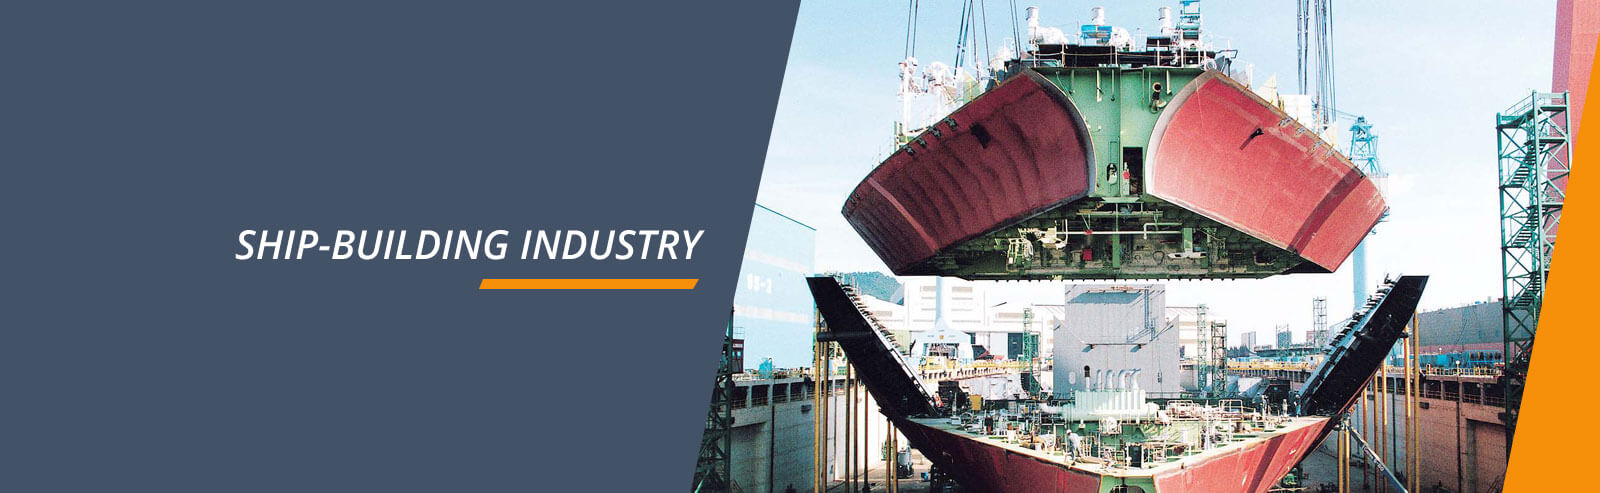 Oilseals-Ship Building Industry